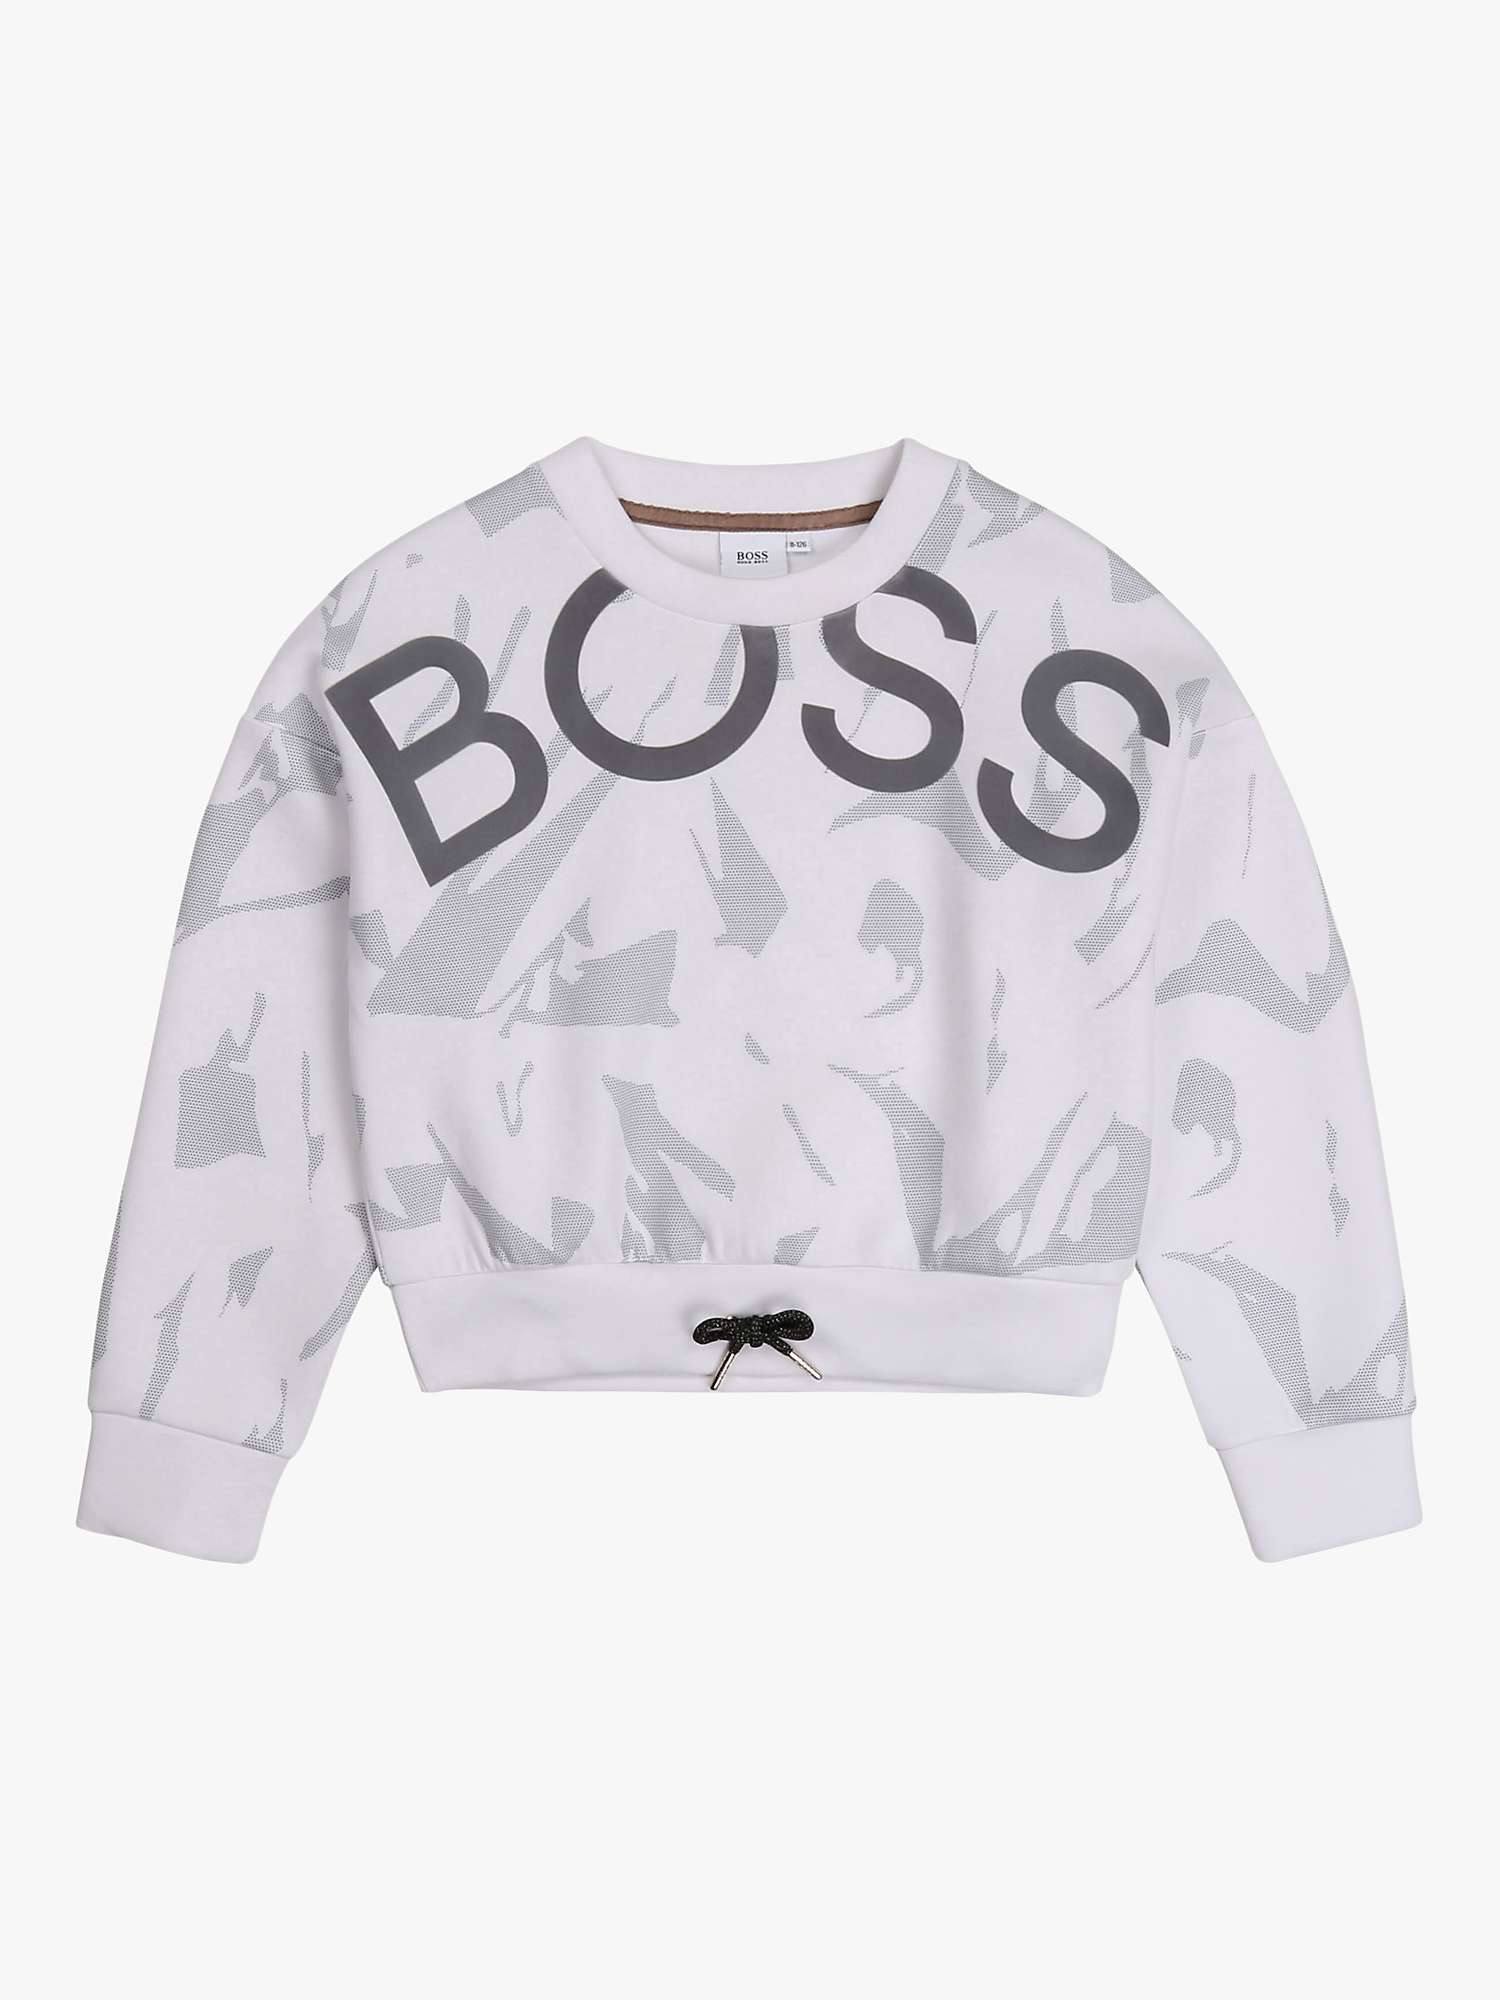 Buy HUGO BOSS Kids' Cropped Sweatshirt, White Online at johnlewis.com